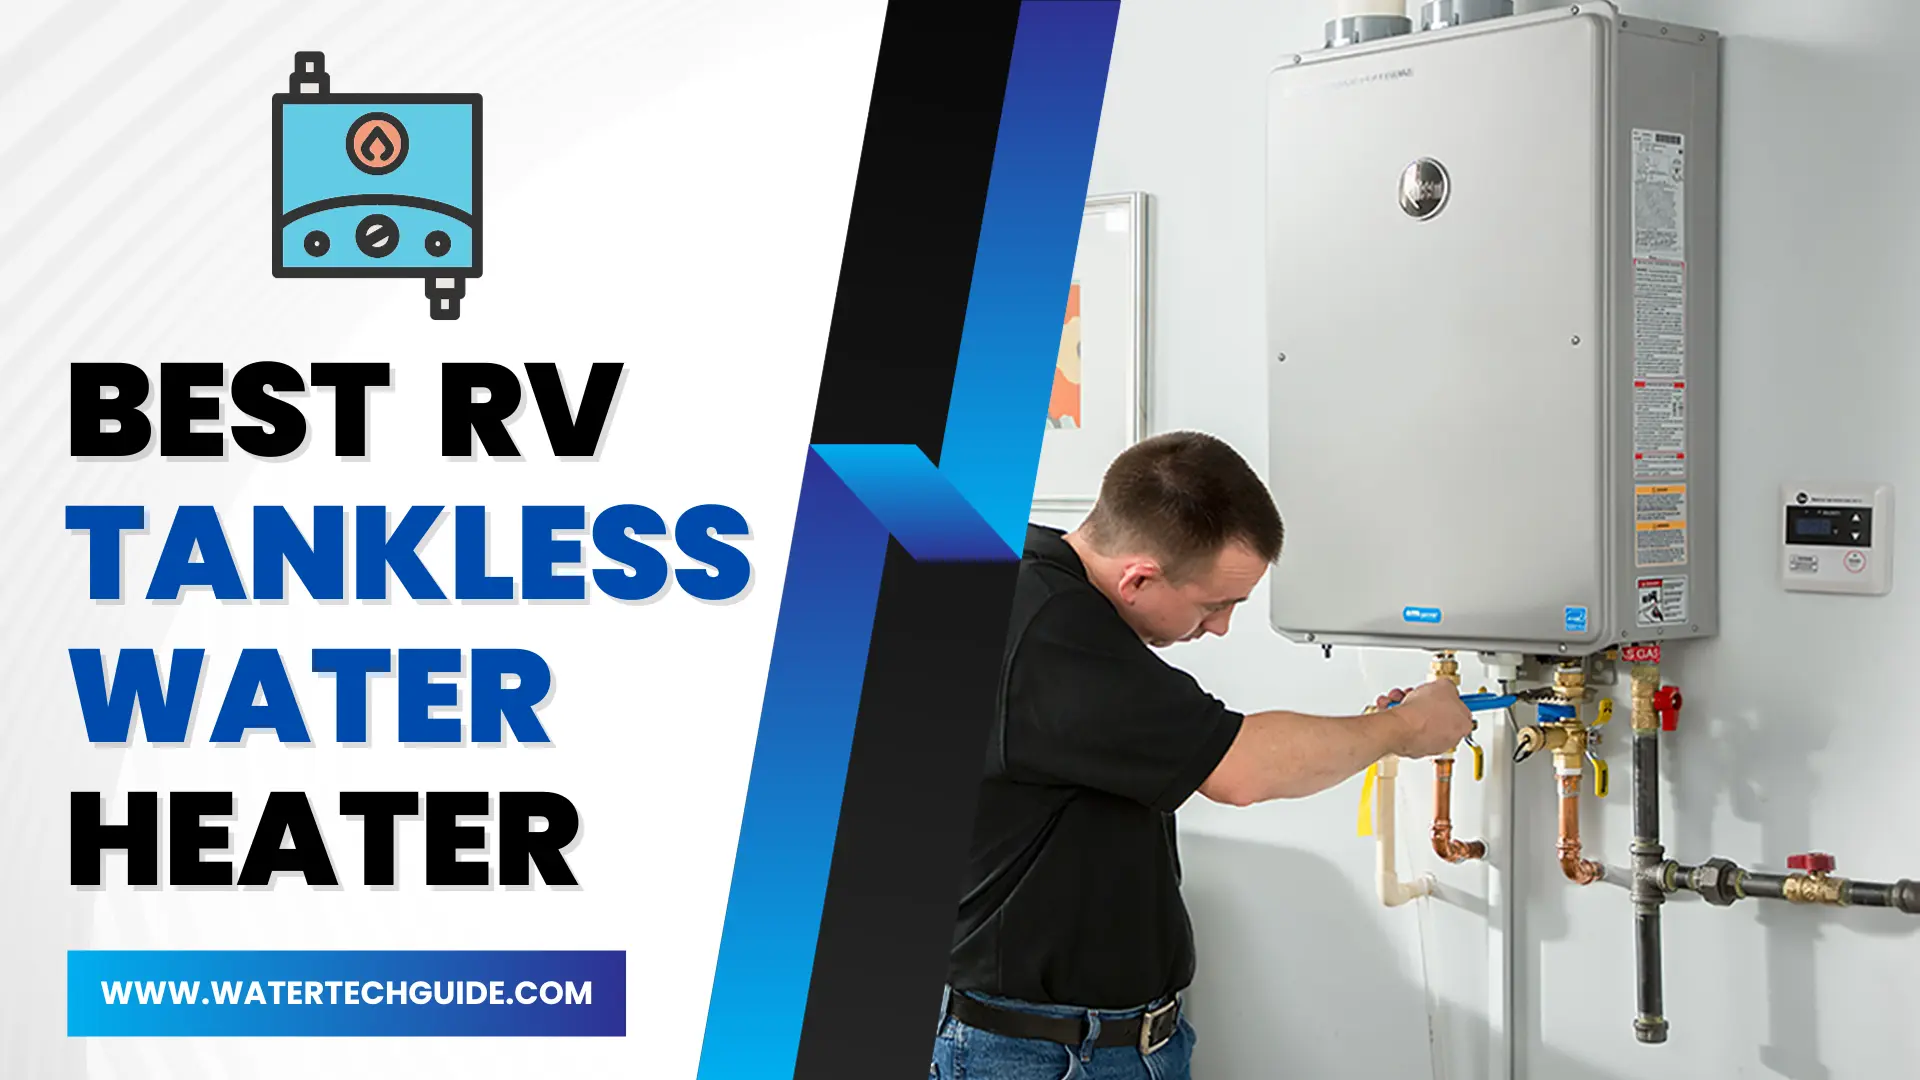 Best RV Tankless Water Heaters